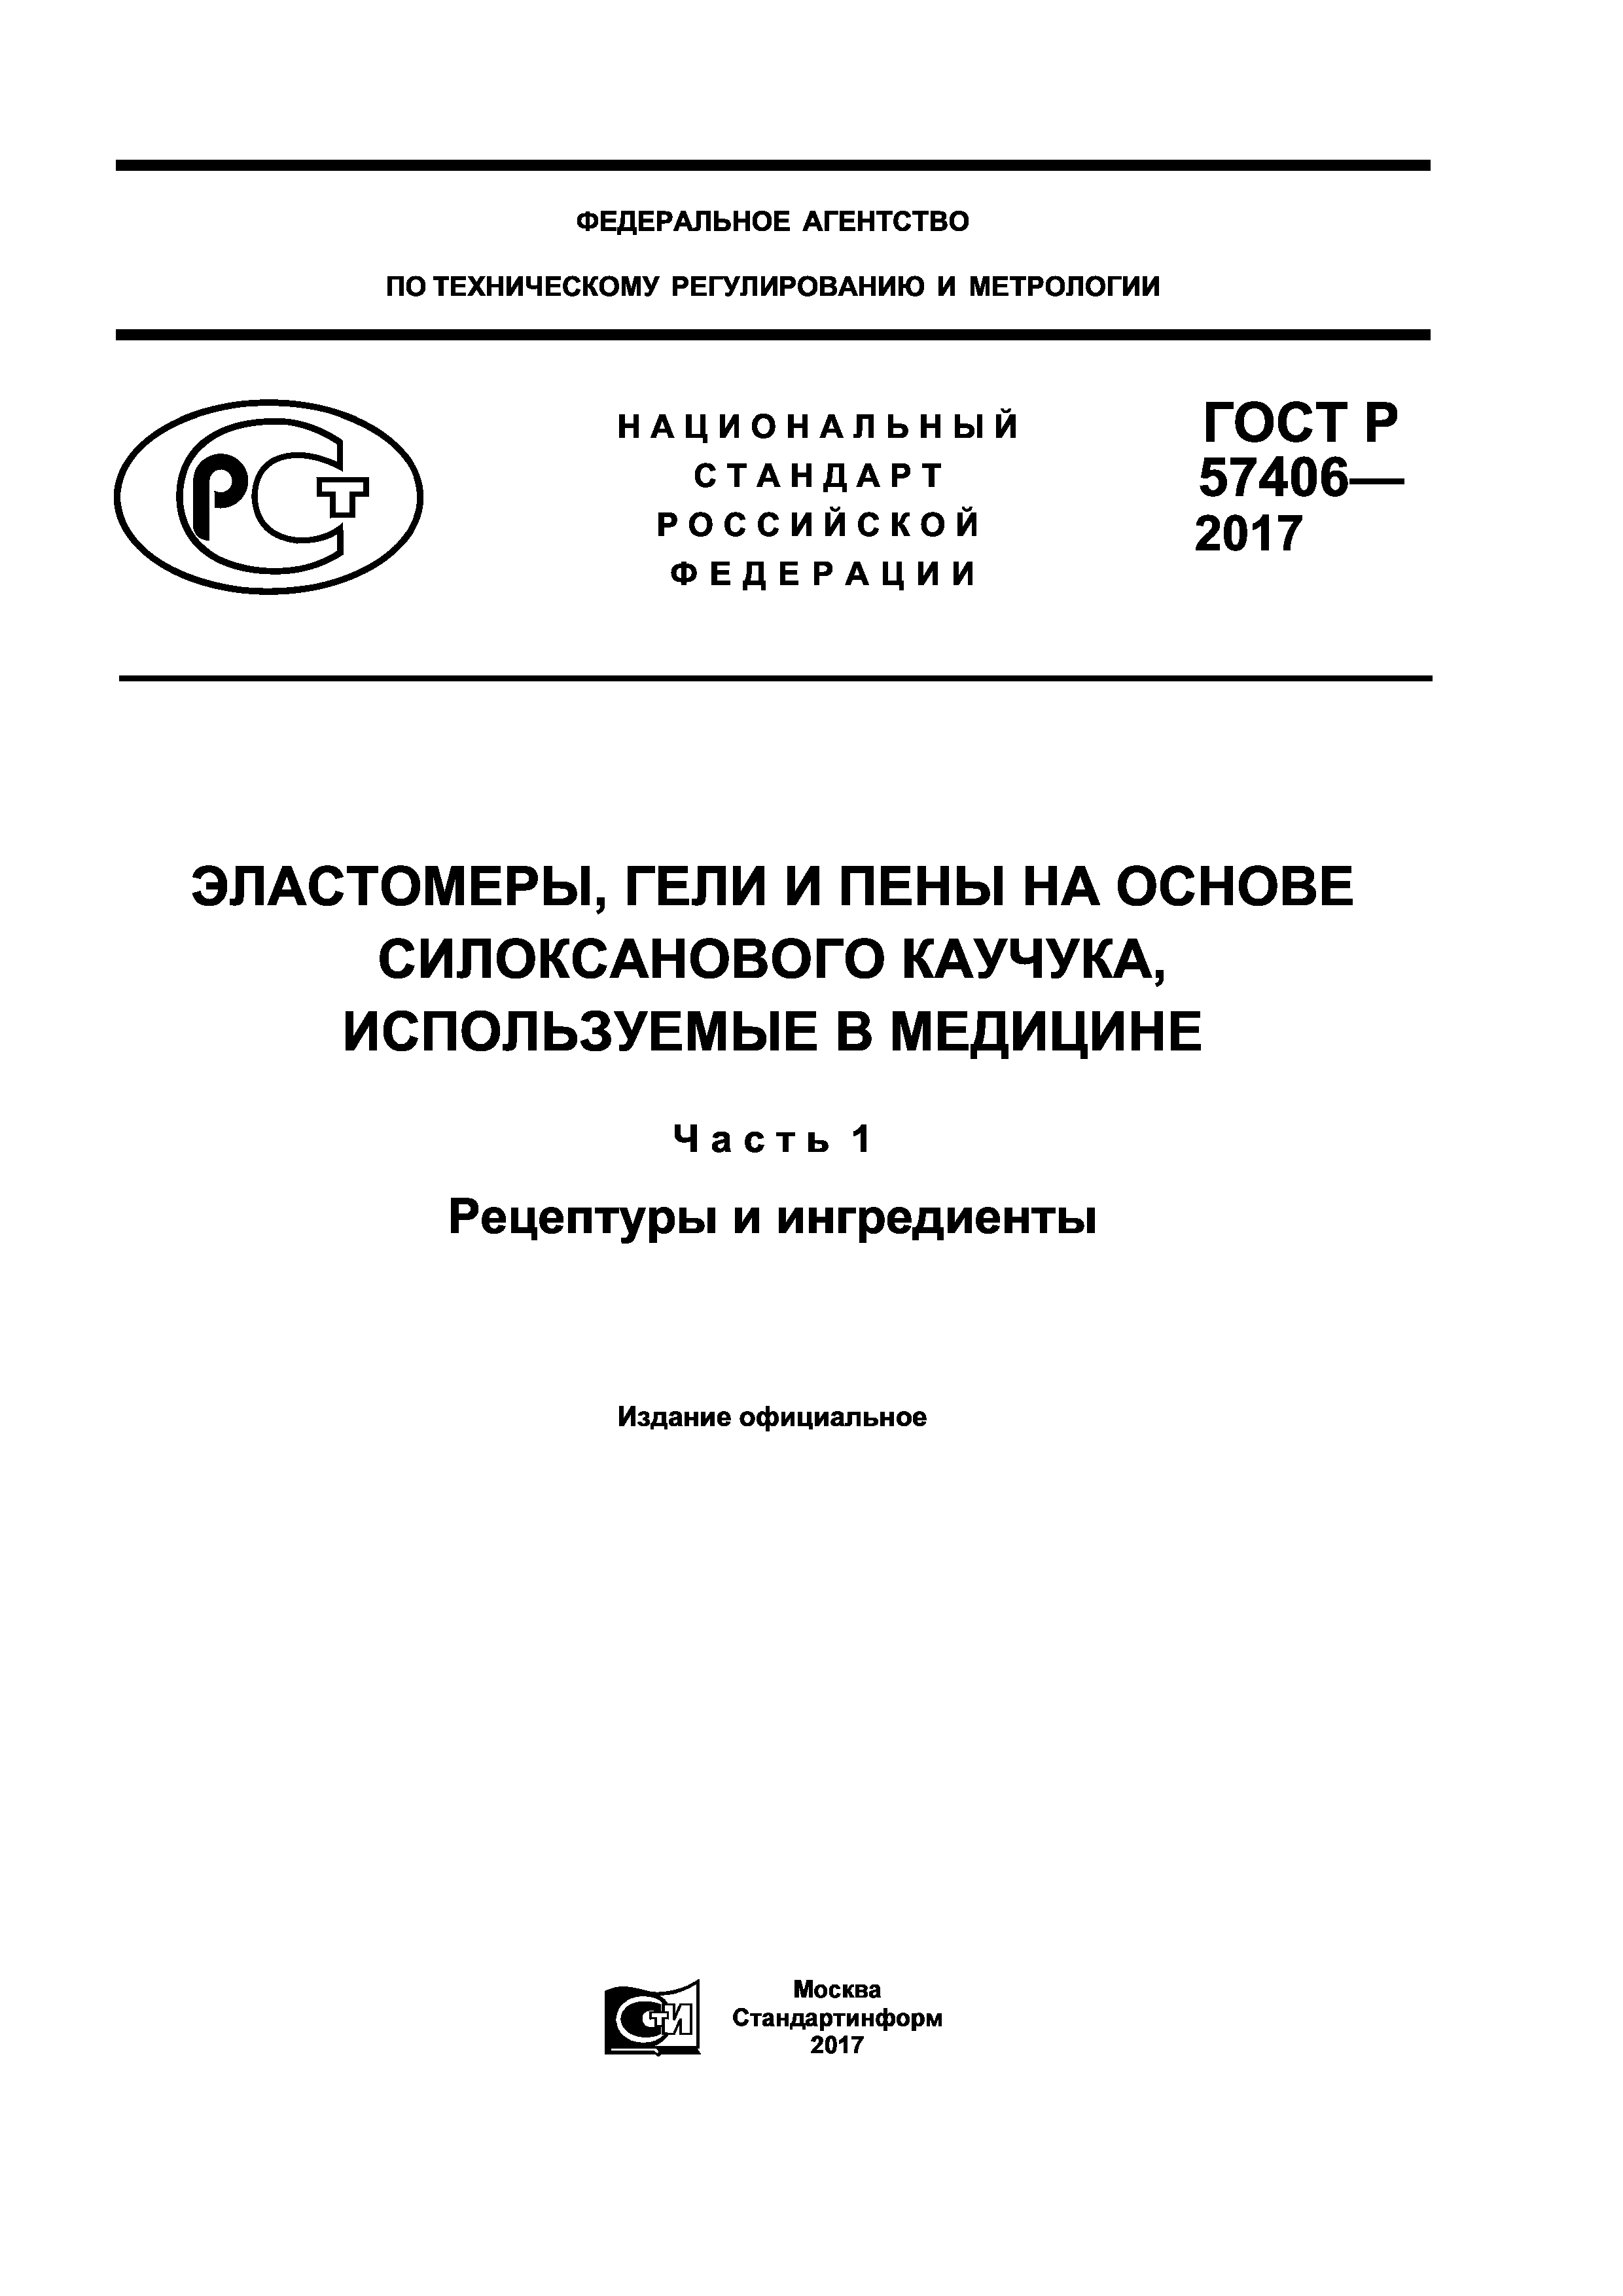 ГОСТ Р 57406-2017